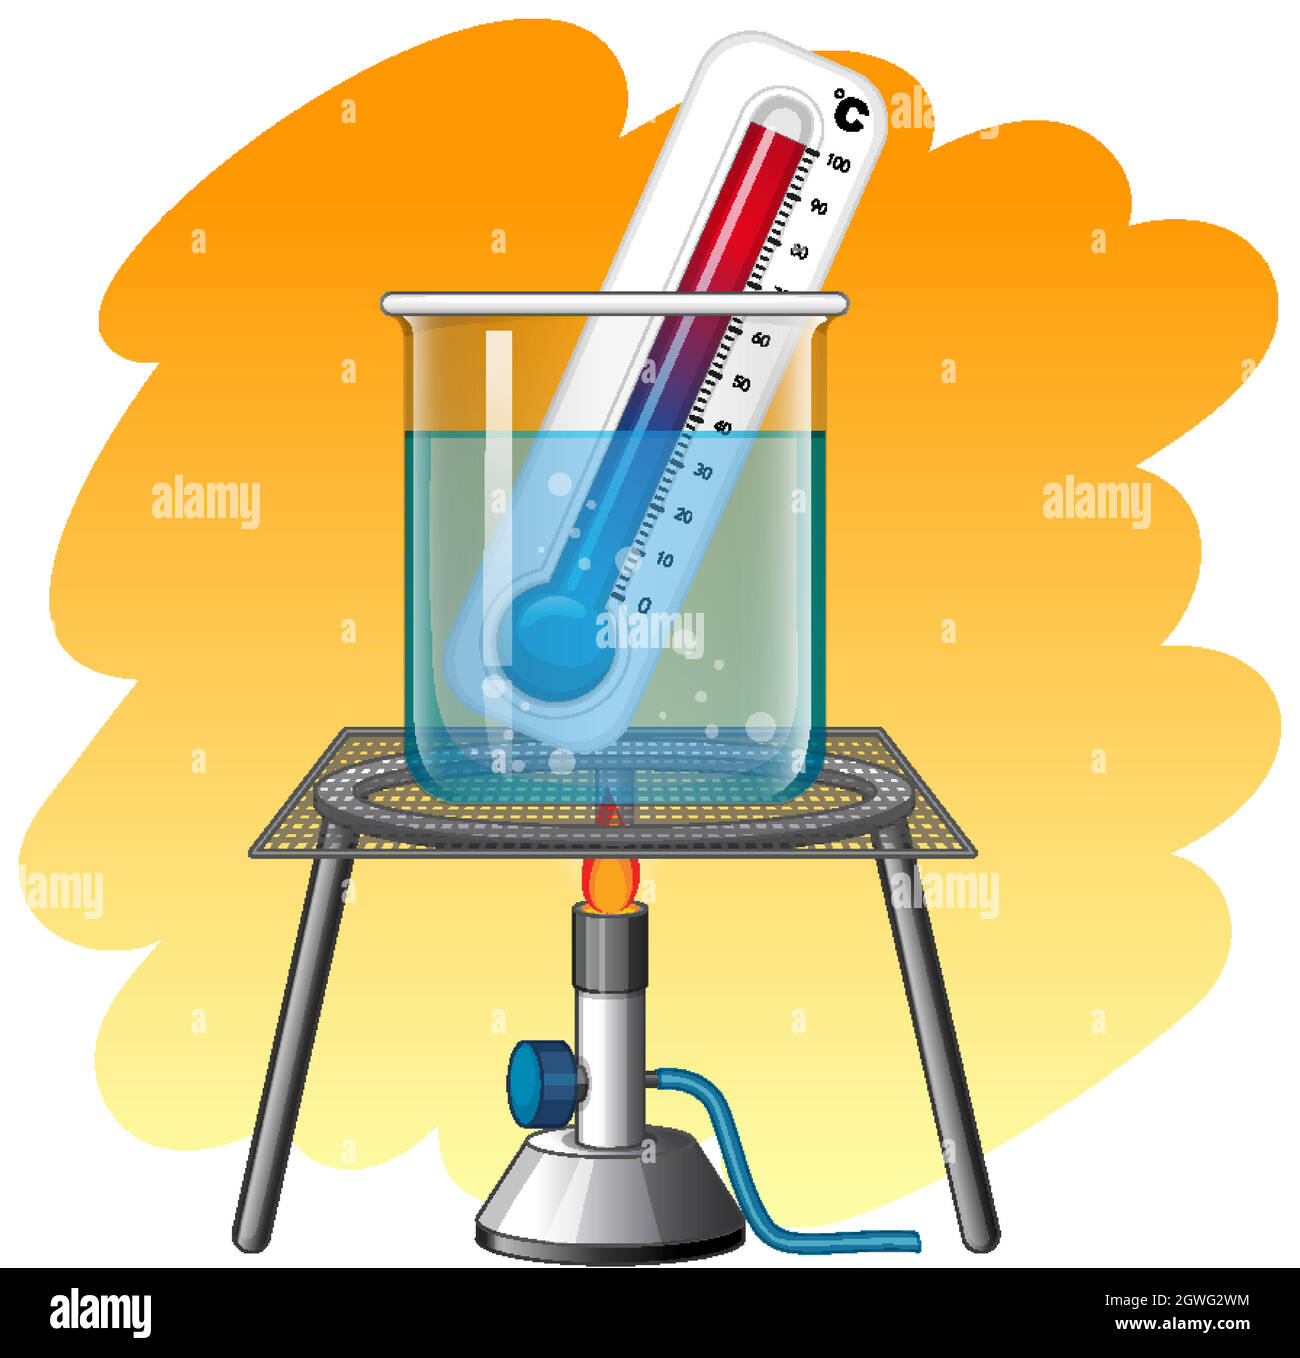 https://c8.alamy.com/comp/2GWG2WM/thermometer-in-hot-water-2GWG2WM.jpg